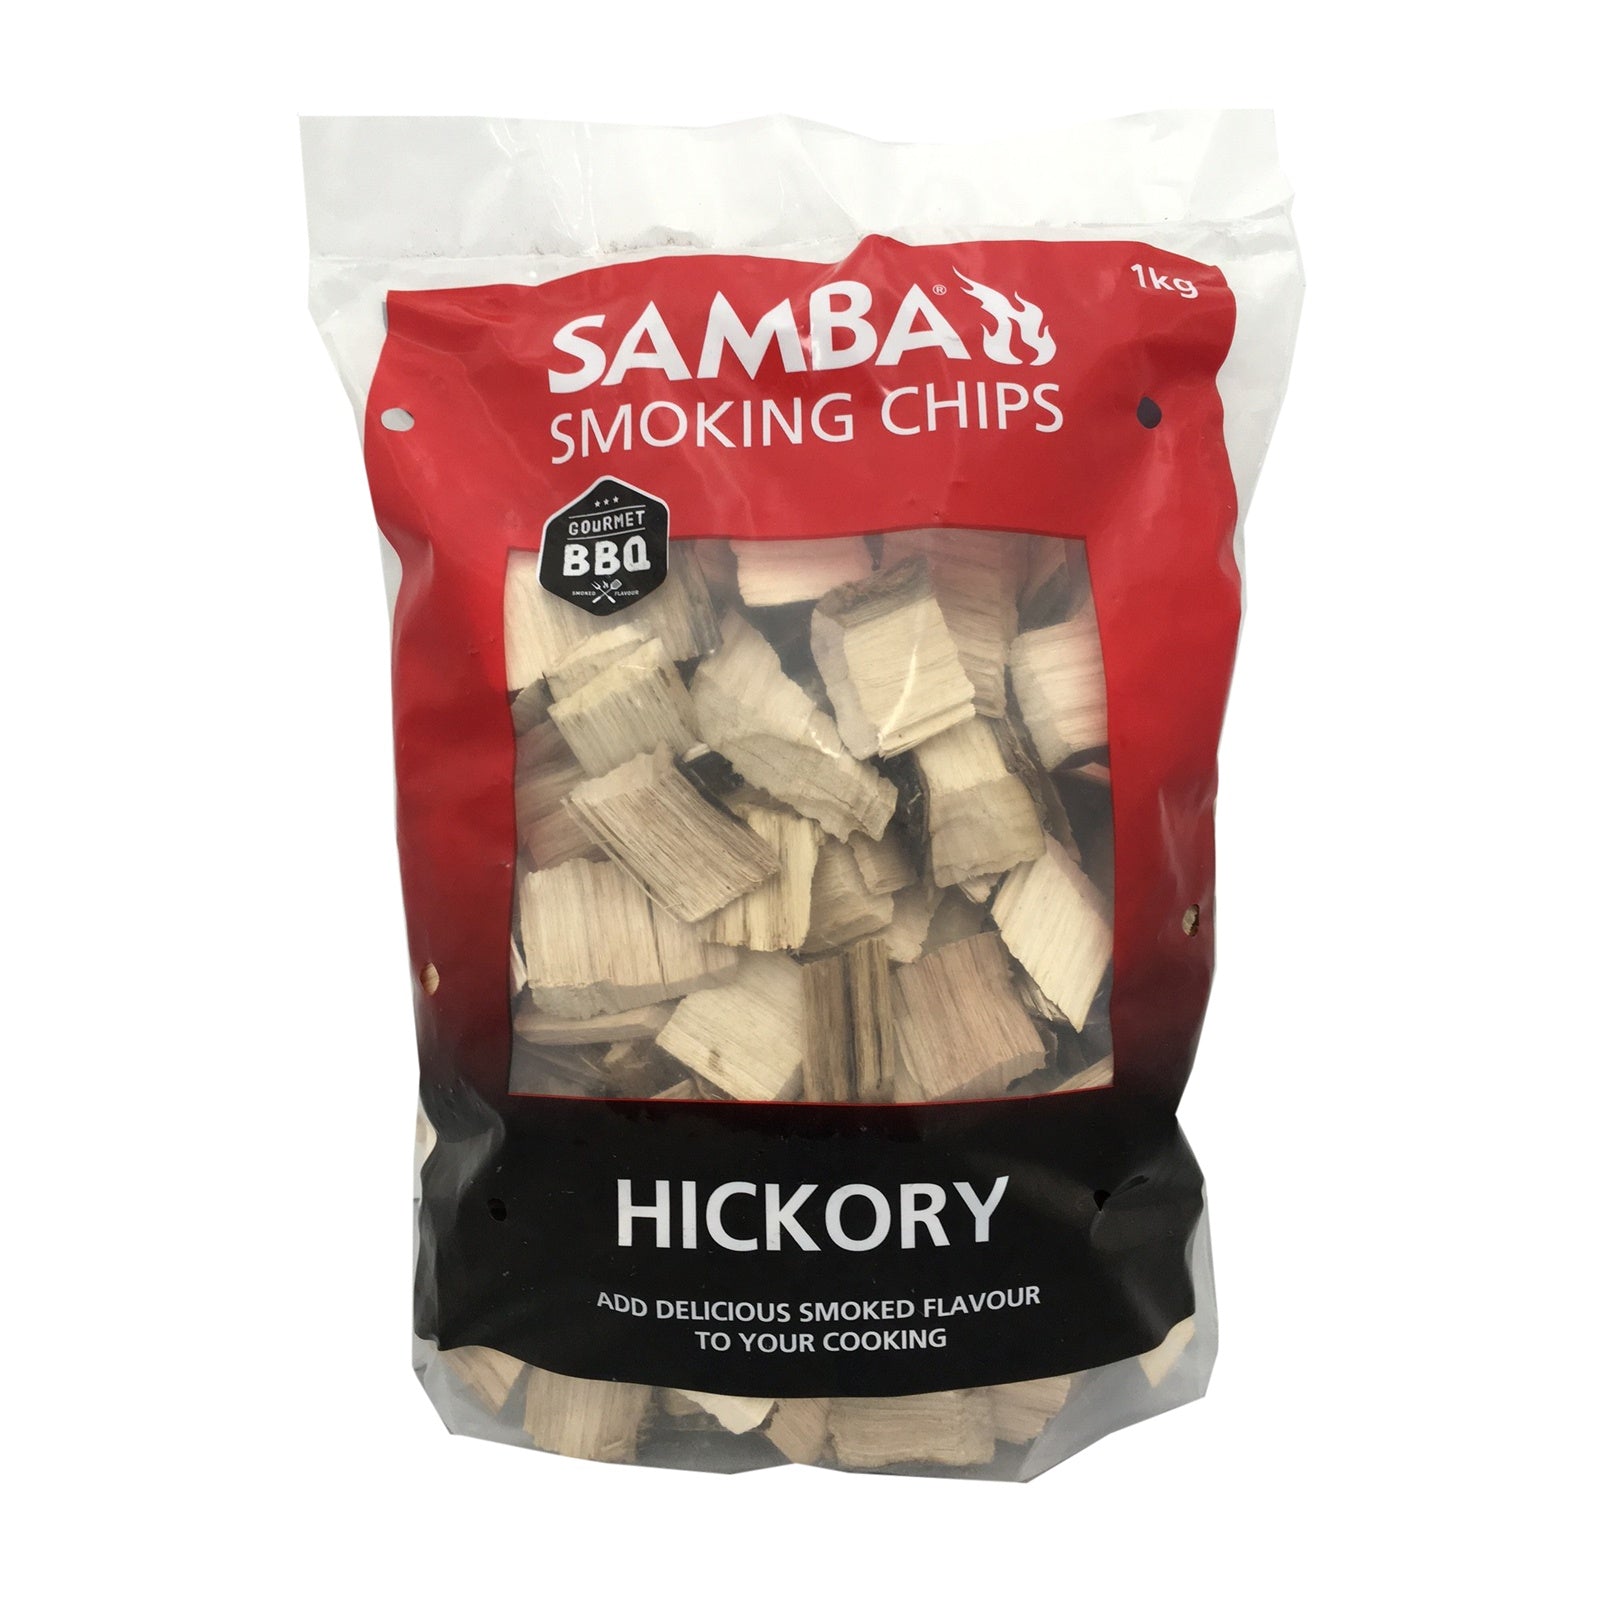 Samba Smoking Chips Hickory 1kg